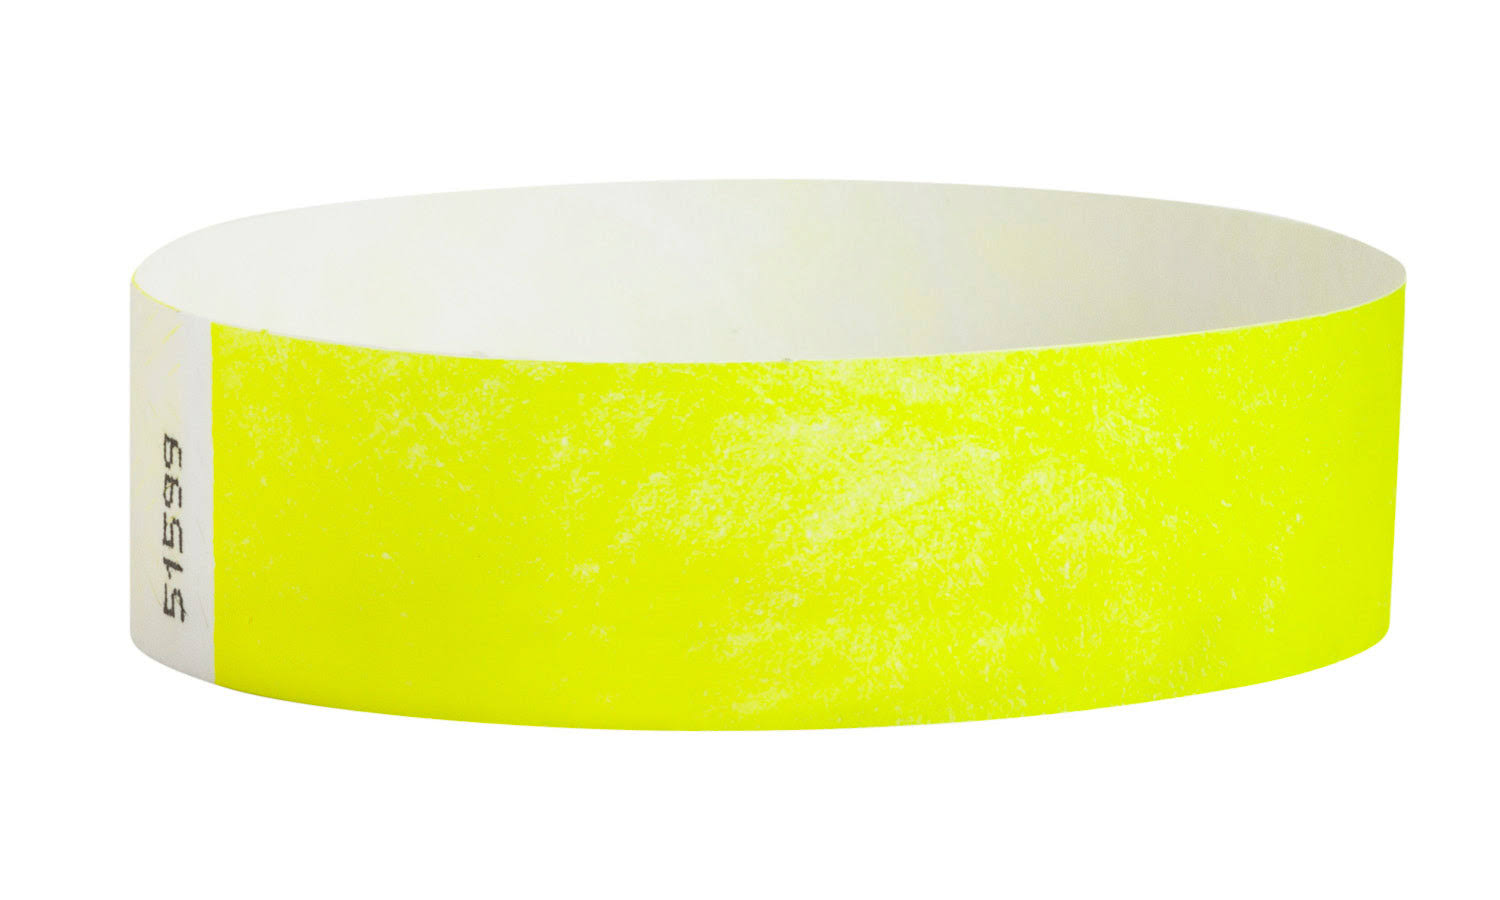 Wristbands-500pk-Neon Yellow